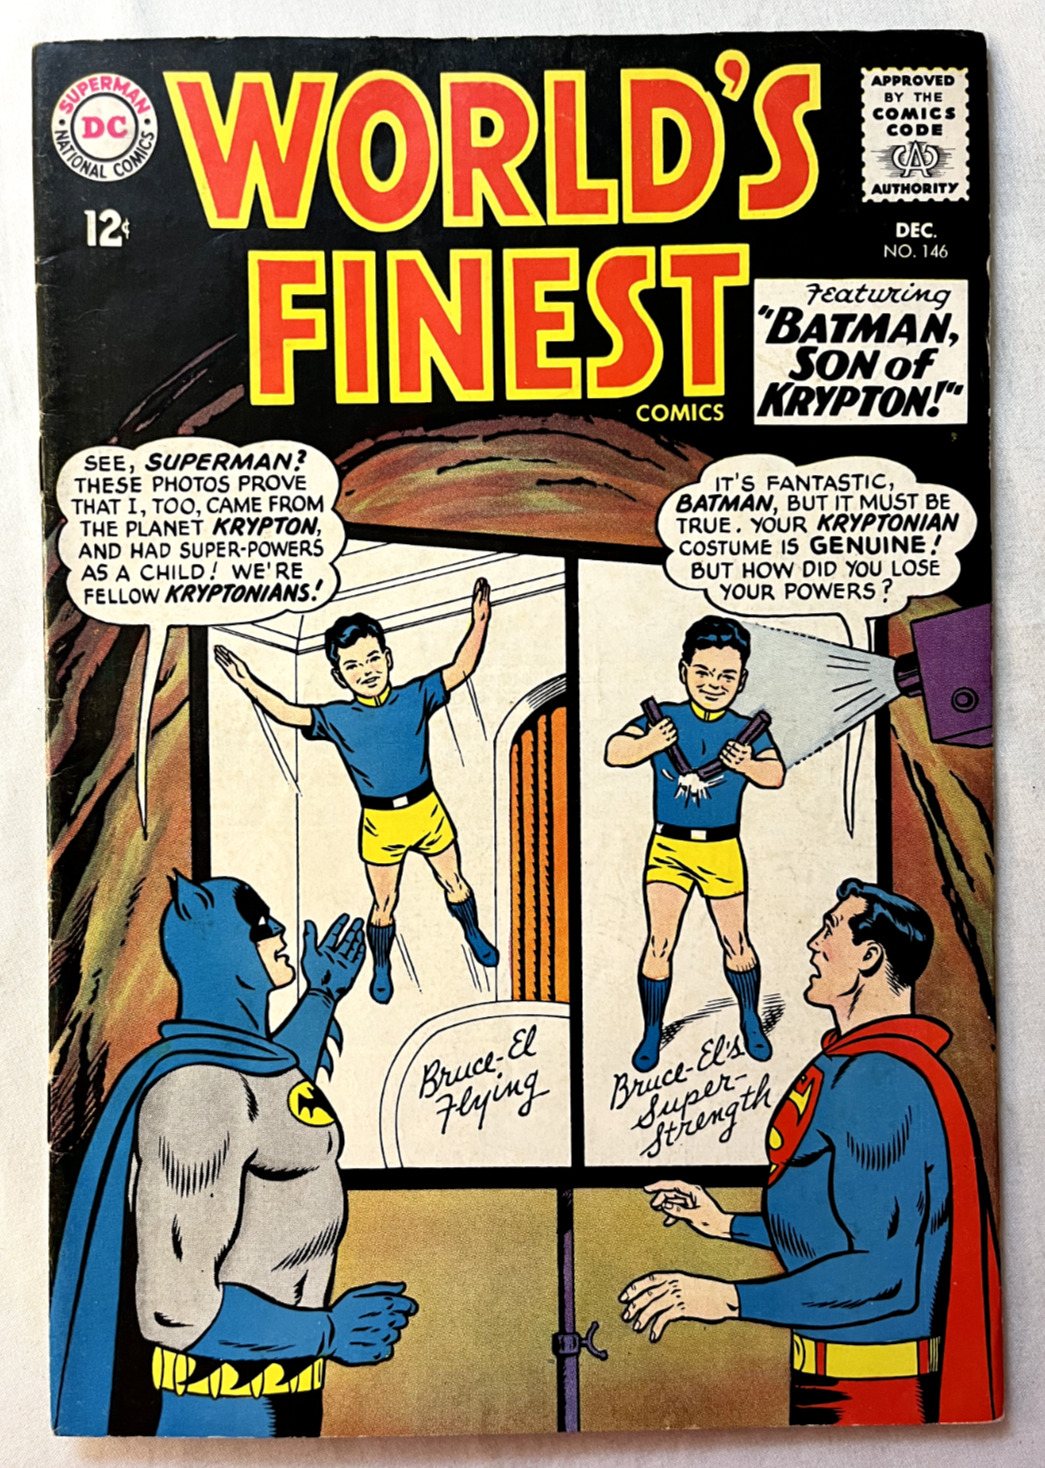 VTG World's Finest Comics #146 SILVER AGE 1964 DC Comics VF SUPERMAN/BATMAN